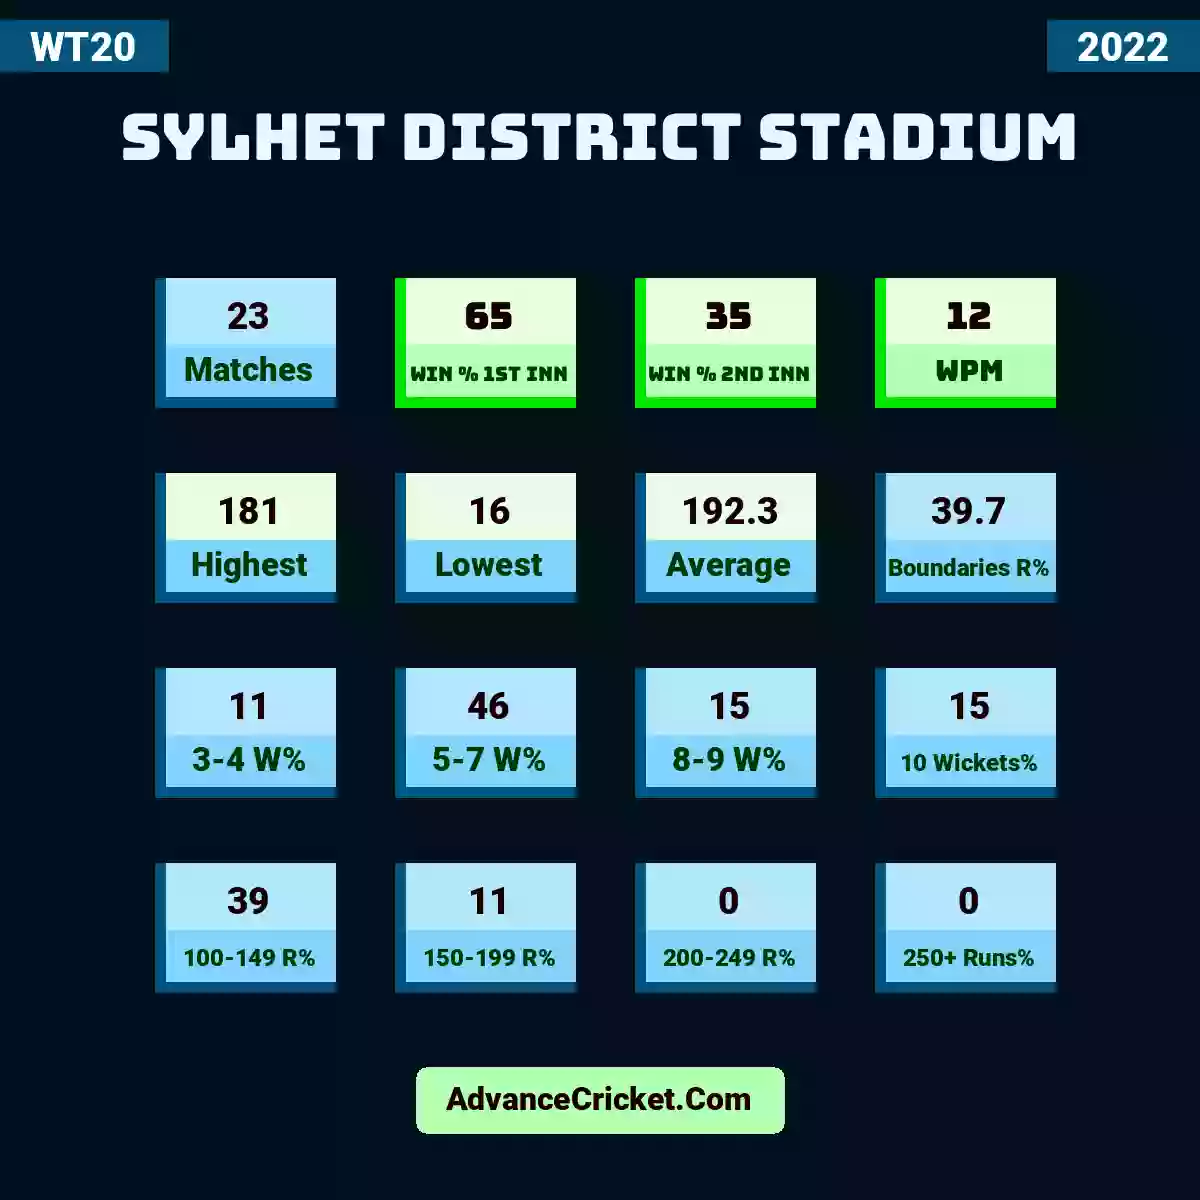 Image showing Sylhet District Stadium with Matches: 23, Win % 1st Inn: 65, Win % 2nd Inn: 35, WPM: 12, Highest: 181, Lowest: 16, Average: 192.3, Boundaries R%: 39.7, 3-4 W%: 11, 5-7 W%: 46, 8-9 W%: 15, 10 Wickets%: 15, 100-149 R%: 39, 150-199 R%: 11, 200-249 R%: 0, 250+ Runs%: 0.